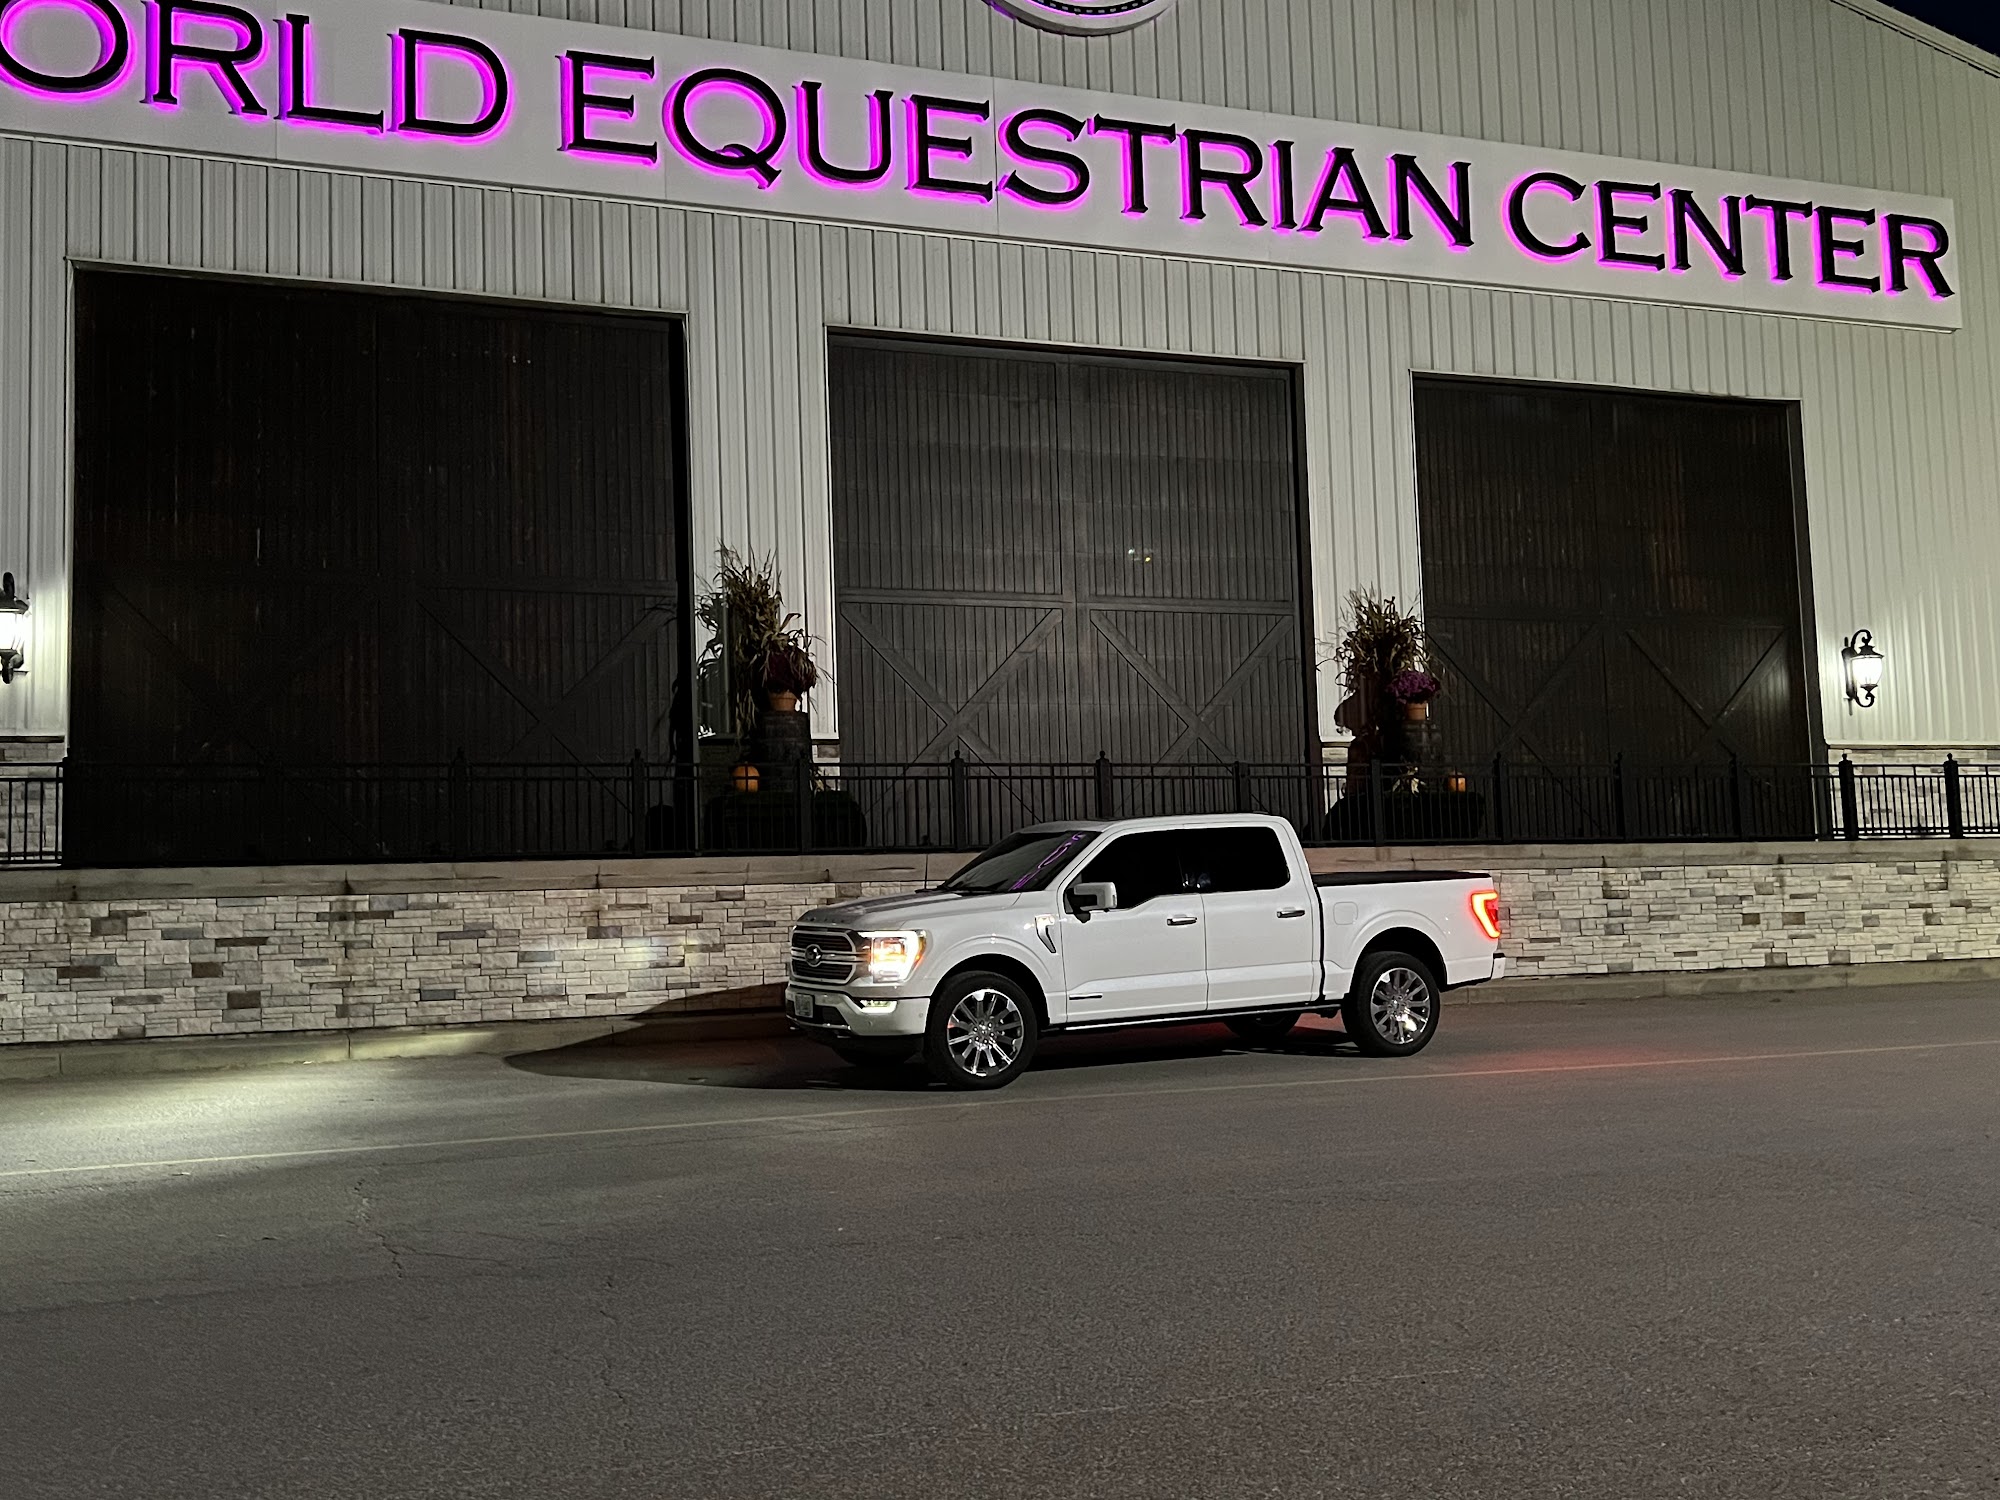 World Equestrian Center 4095 OH-730, Wilmington Ohio 45177